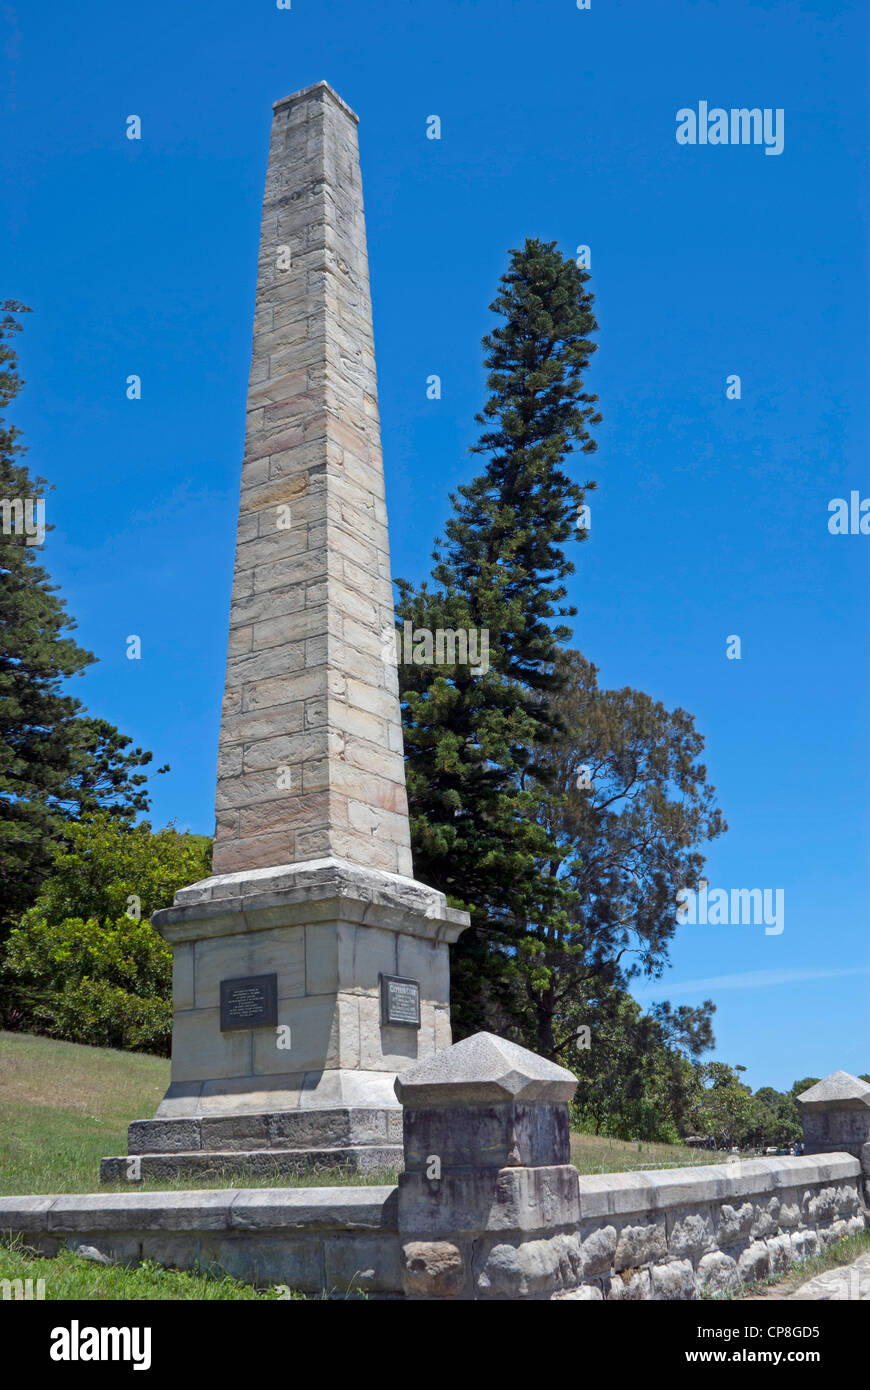 The obelisk in Botany Bay National Park marking where Captain James Cook first landed in Australia Stock Photo